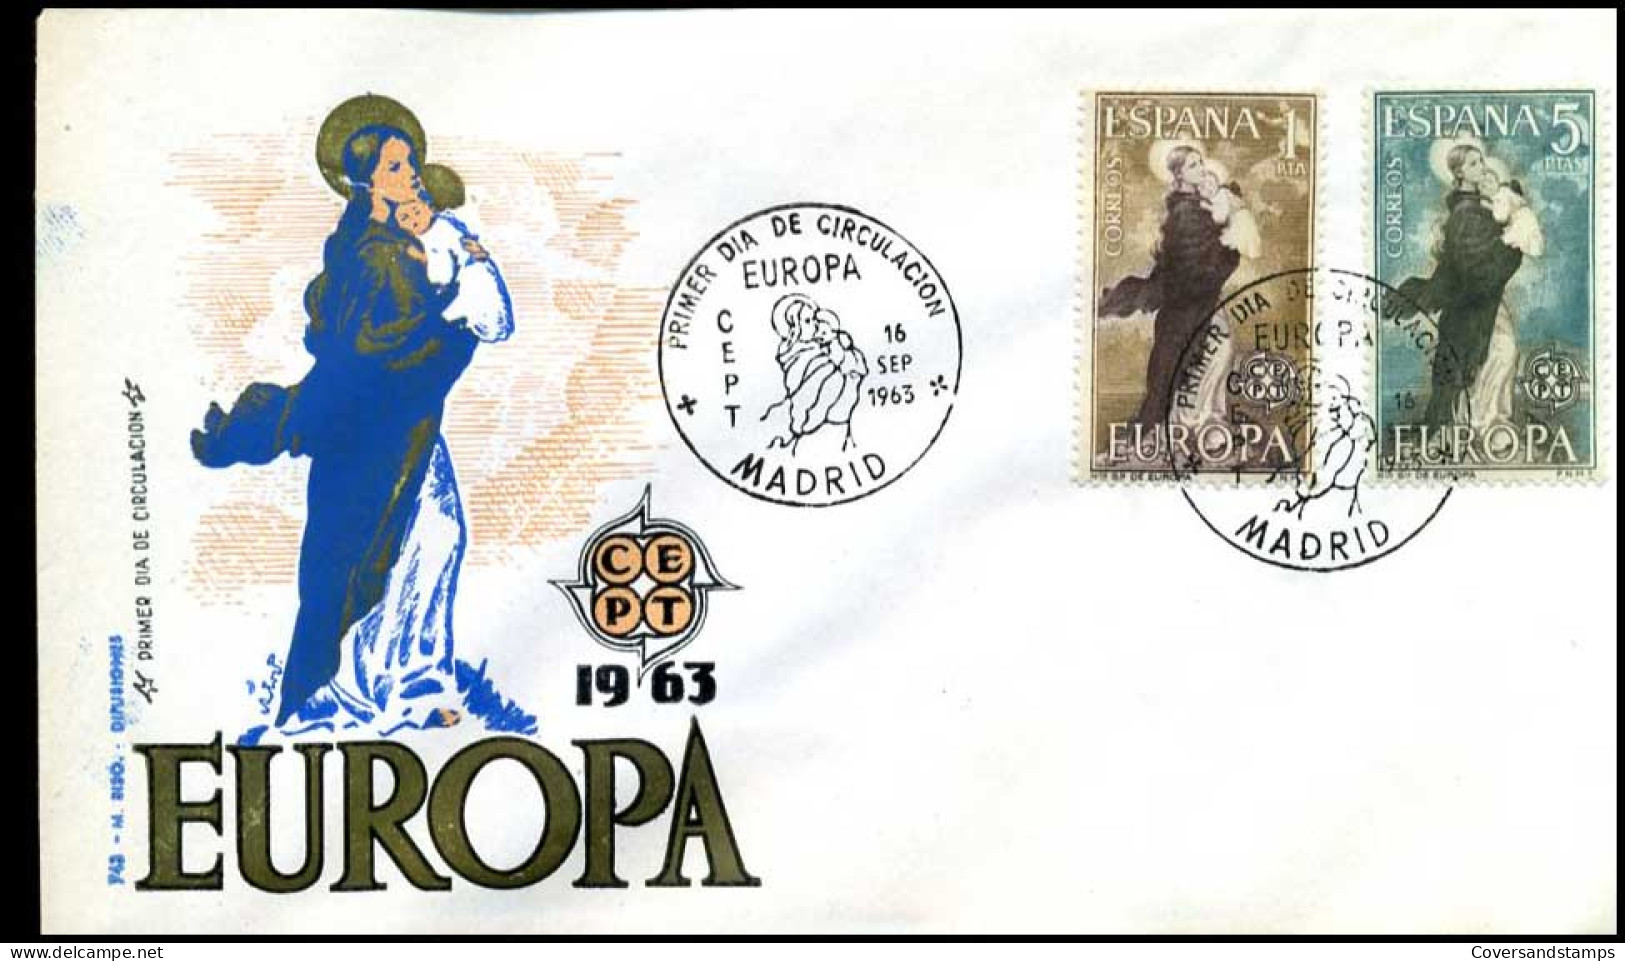  Spanje - FDC - Europa CEPT 1963 - 1963